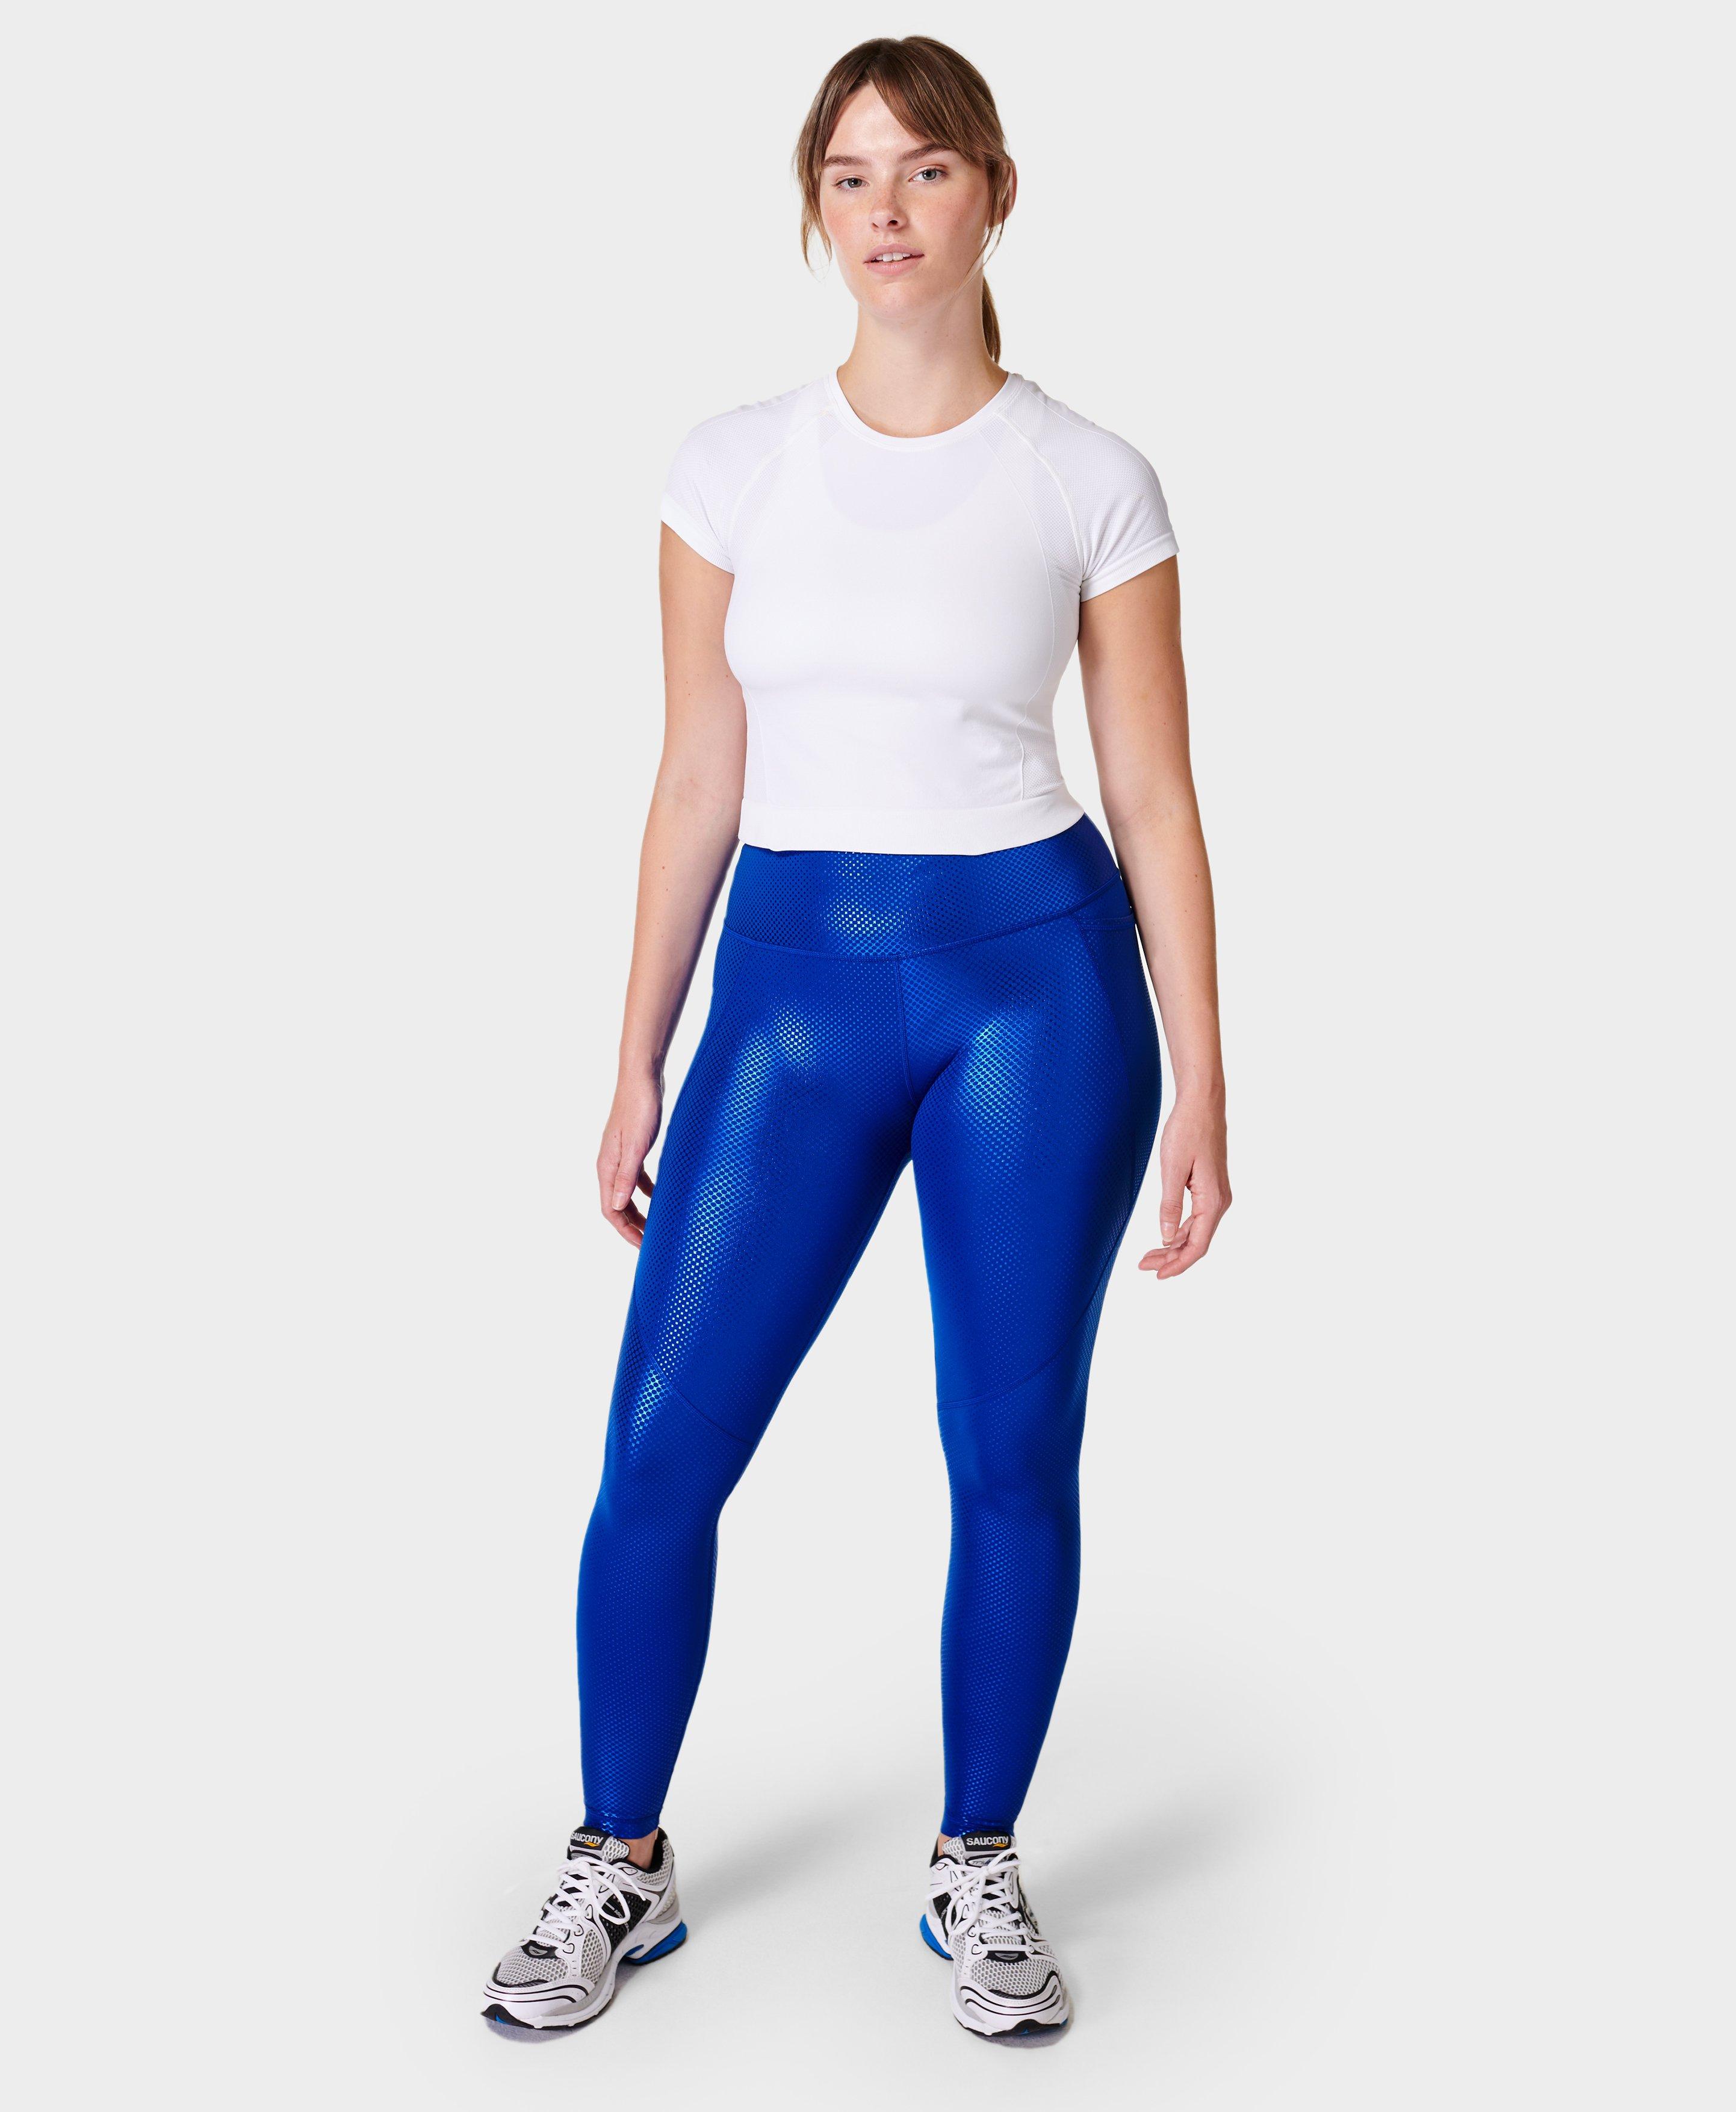 Sweaty Betty Beetle Blue Hexagon Printed Power Leggings SB4550A Women's M  Short